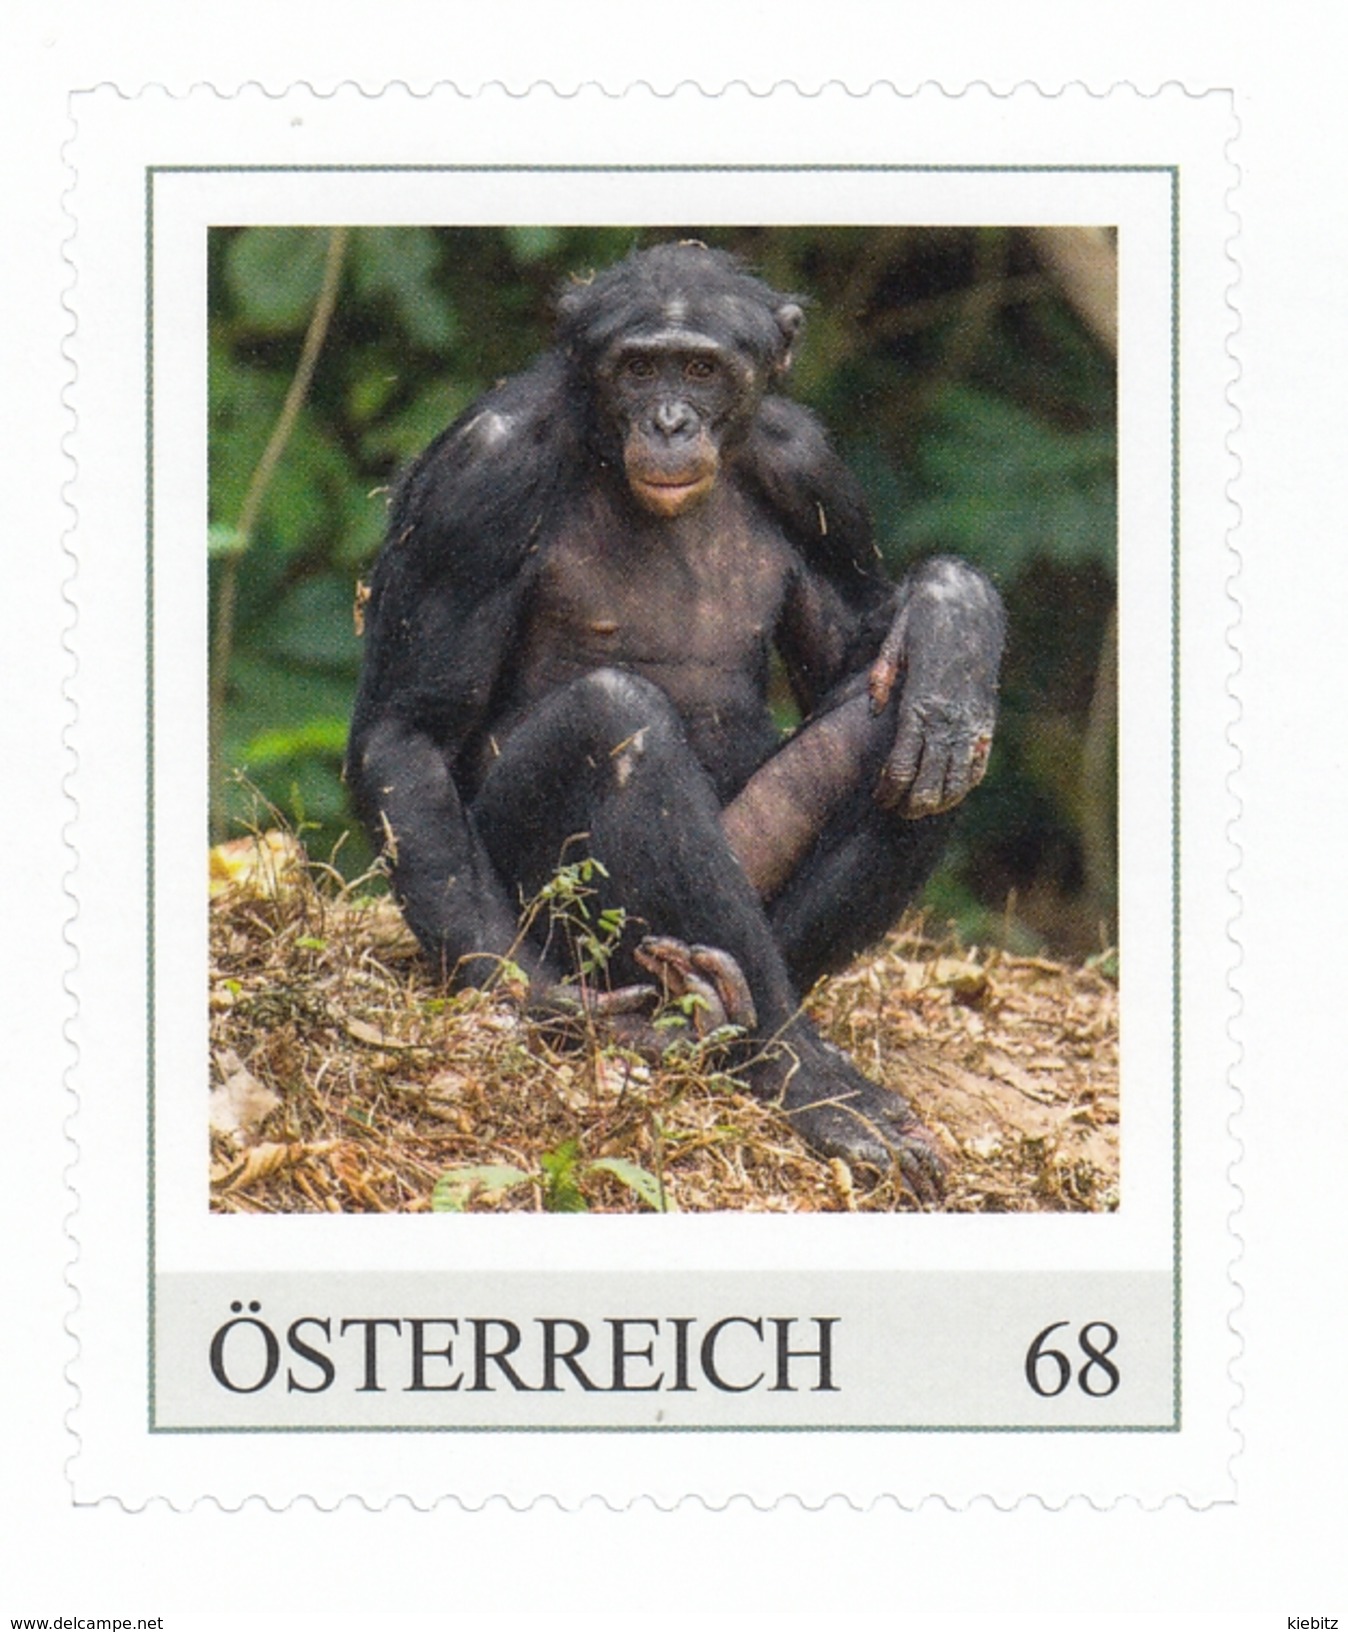 ÖSTERREICH 2017 ** Affe / Bonobo Zwergschimpanse - PM Personalized Stamp MNH - Affen